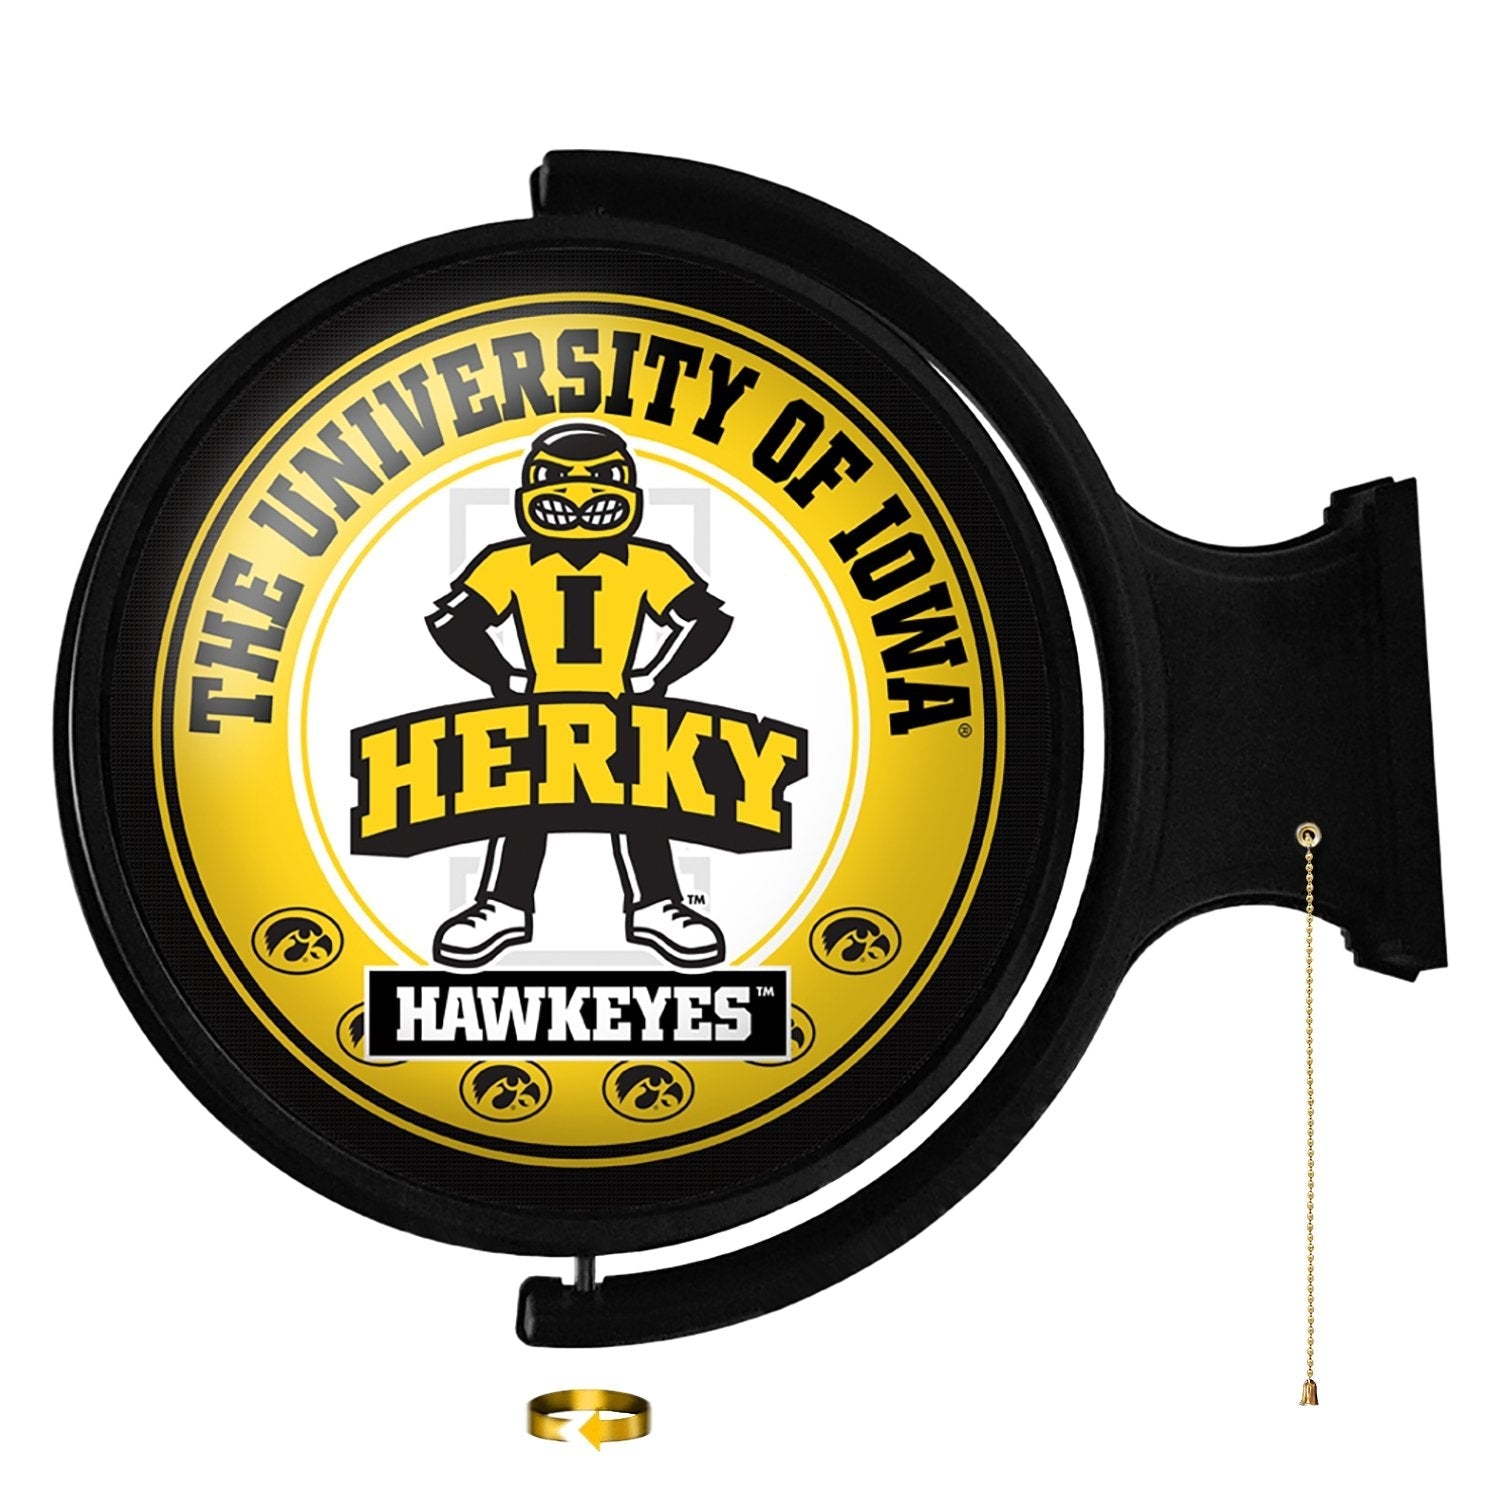 Iowa-Hawkeyes-Iowa-Logo-Dimensional-College-Wall-Art - College Wall Art